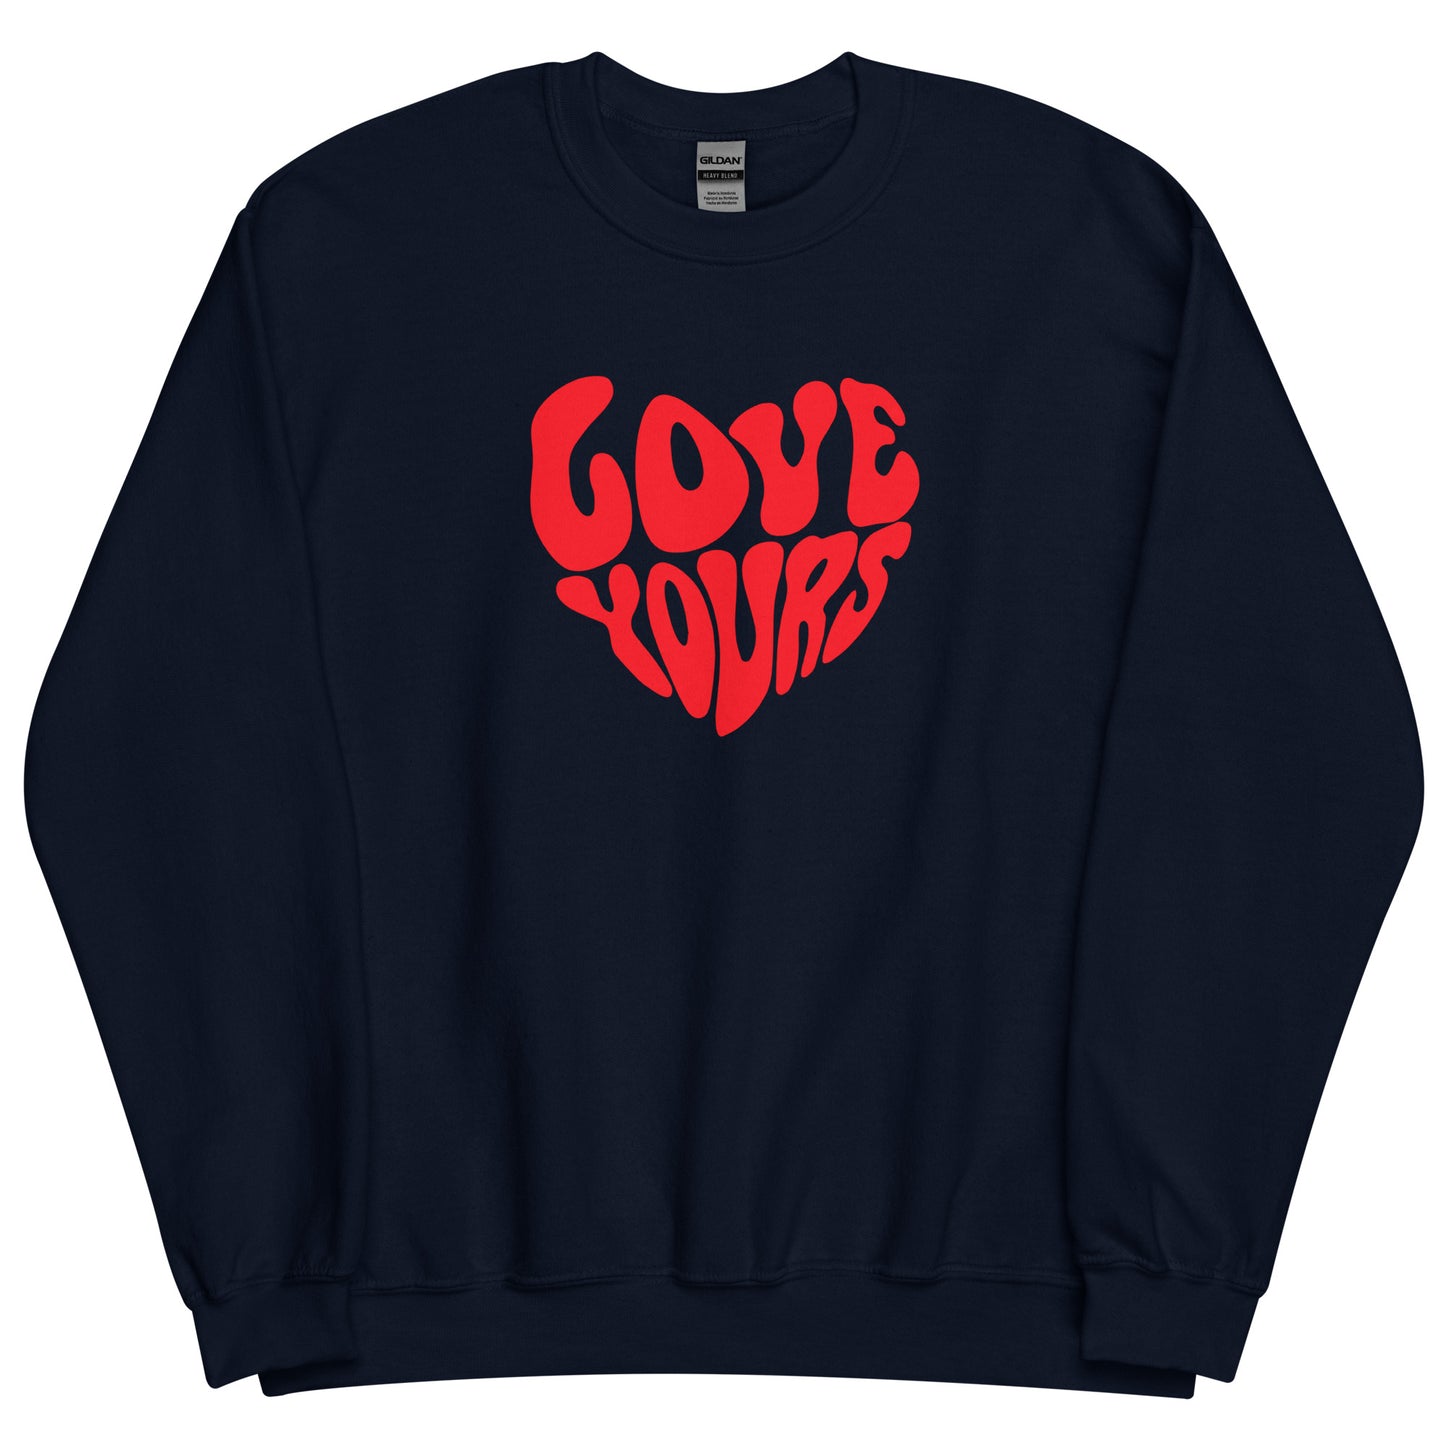 Crew Neck Sweatshirt with Love Symbol